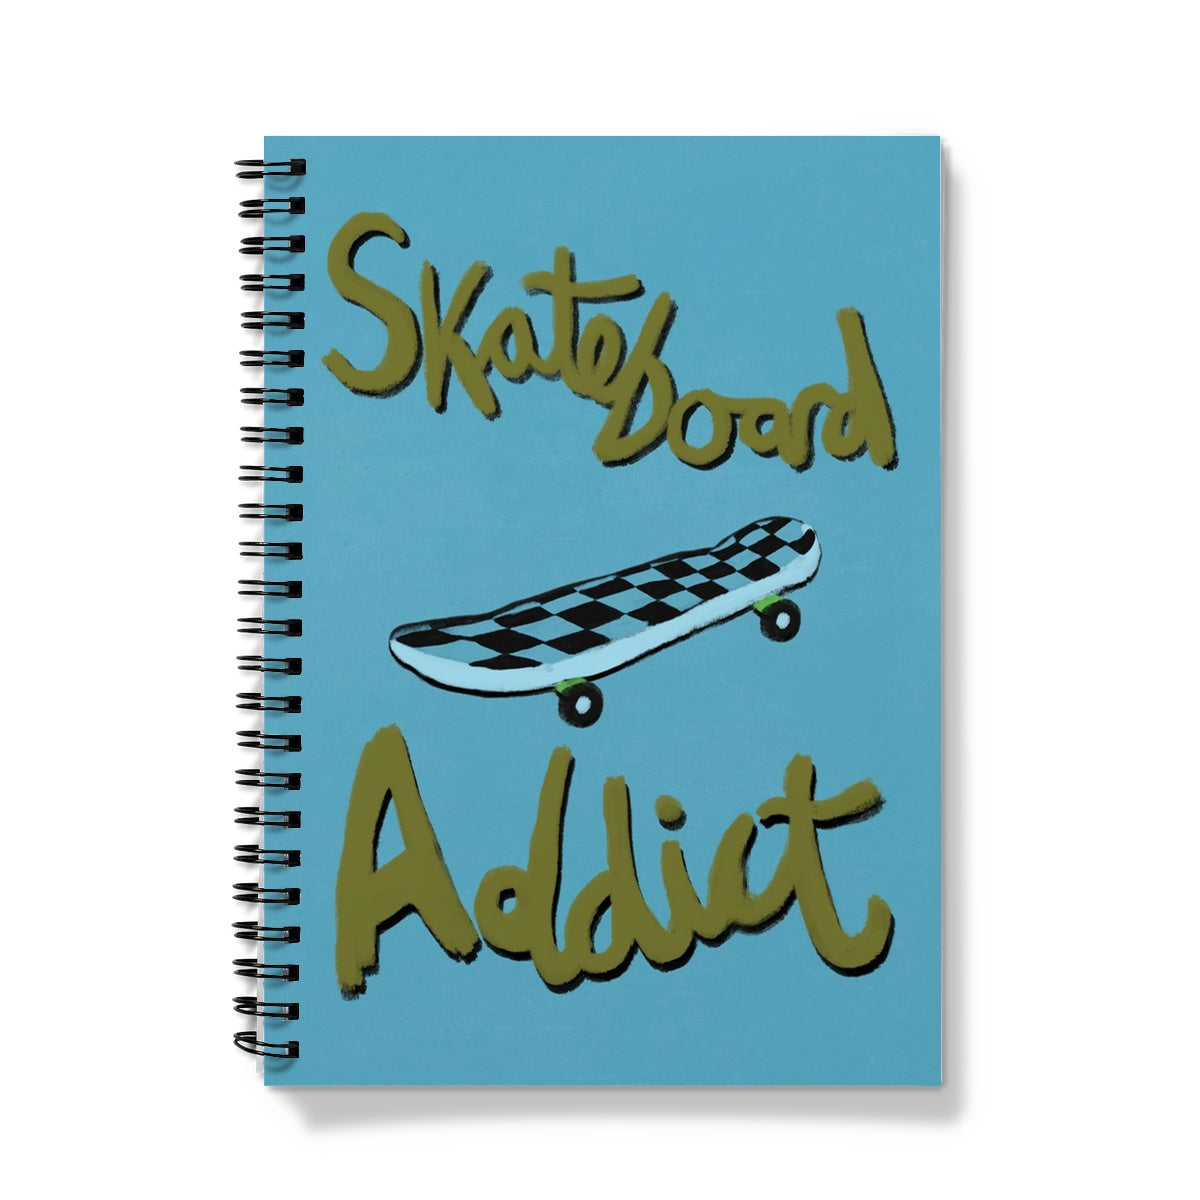 Skateboard Addict - Olive Green, Blue Notebook